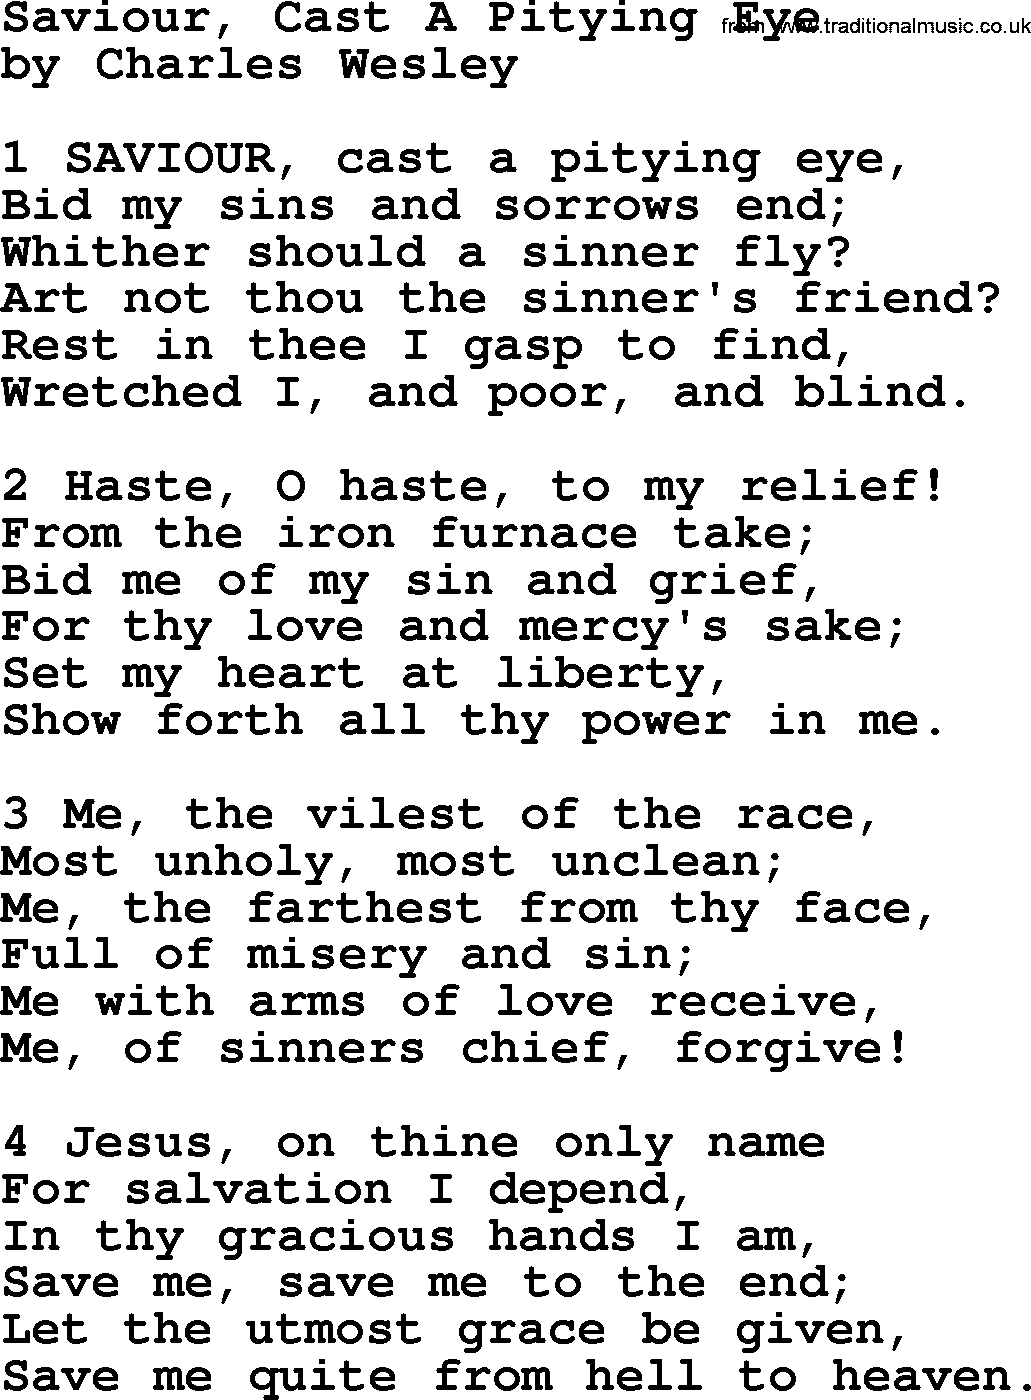 Charles Wesley hymn: Saviour, Cast A Pitying Eye, lyrics